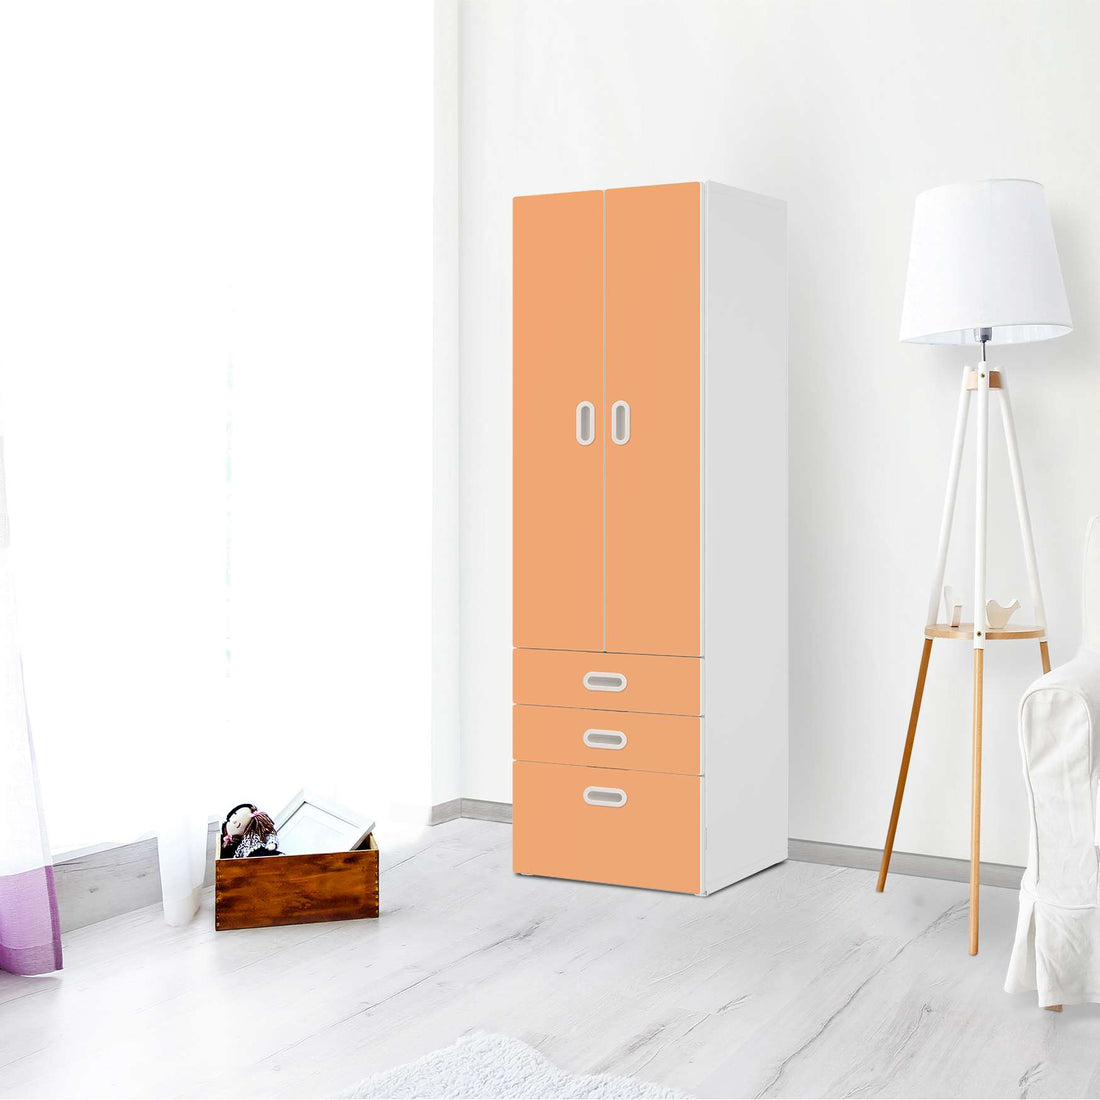 Klebefolie Orange Light - IKEA Stuva / Fritids kombiniert - 3 Schubladen und 2 große Türen - Kinderzimmer